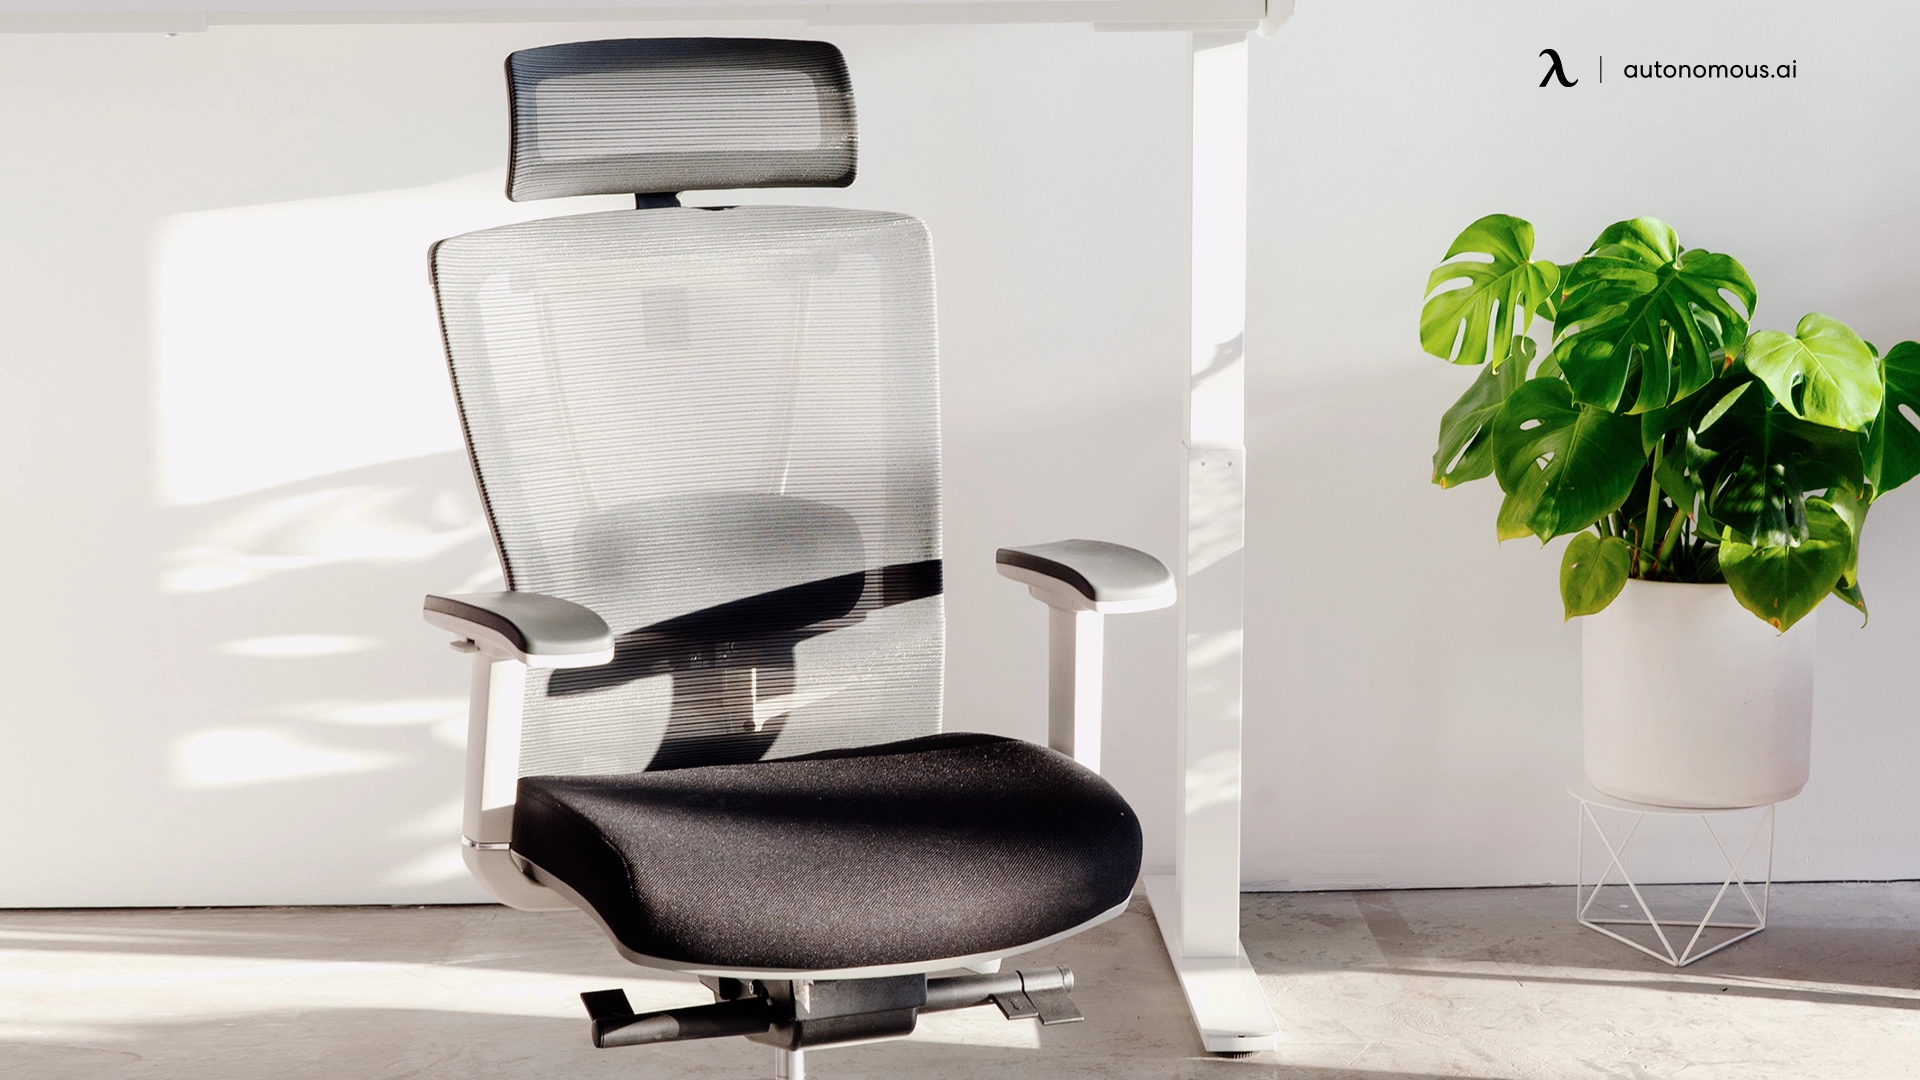 Buy an Ergonomic Chair - residence hall furniture